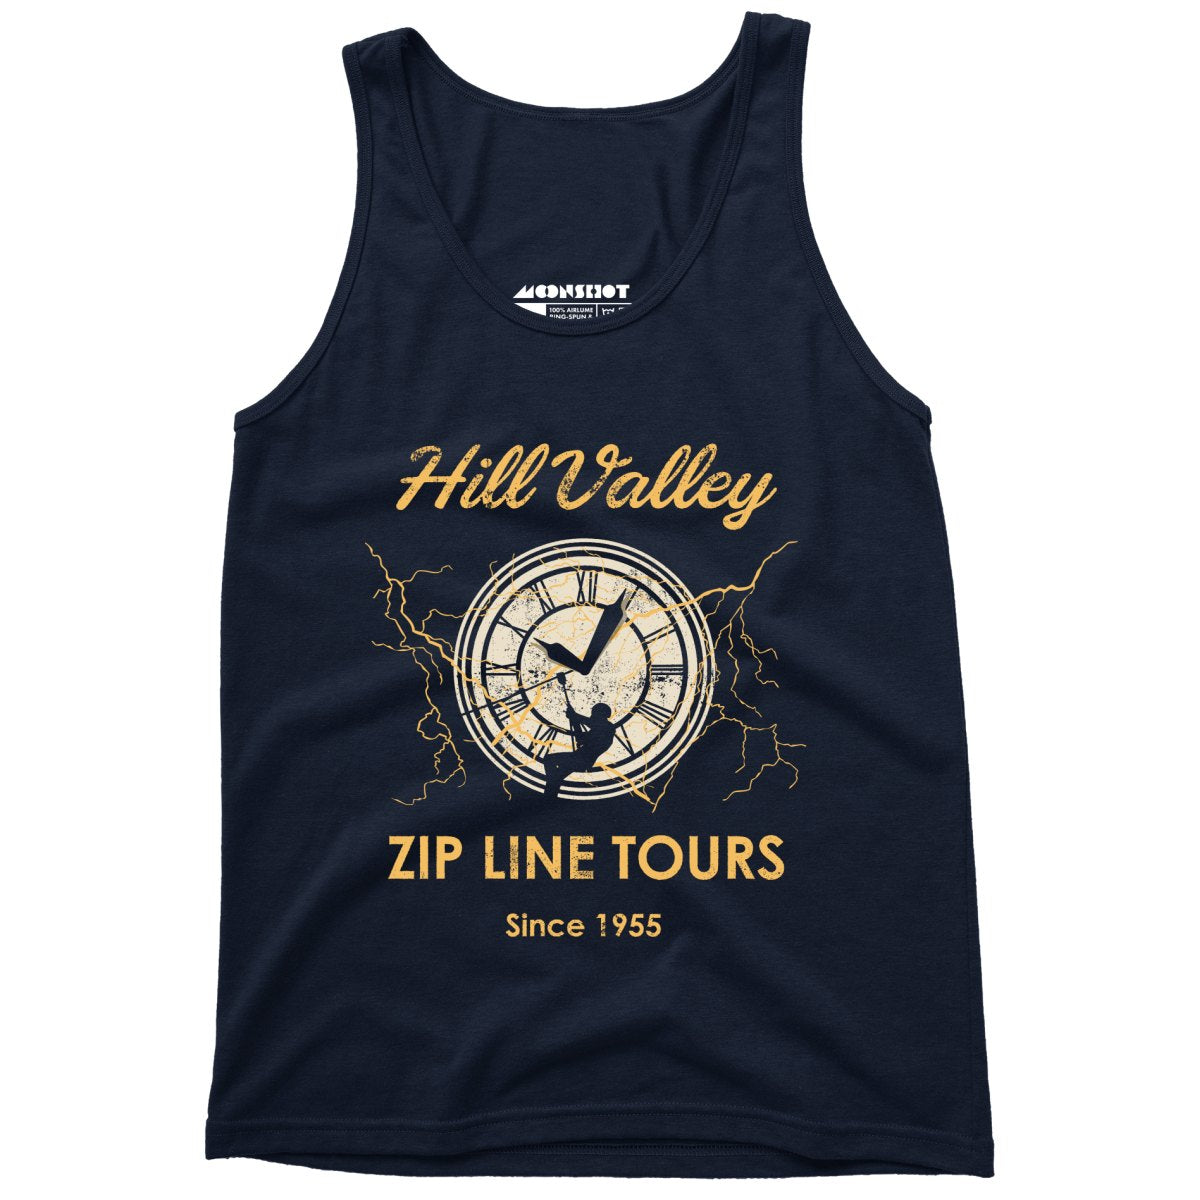 Hill Valley Zip Line Tours - Unisex Tank Top